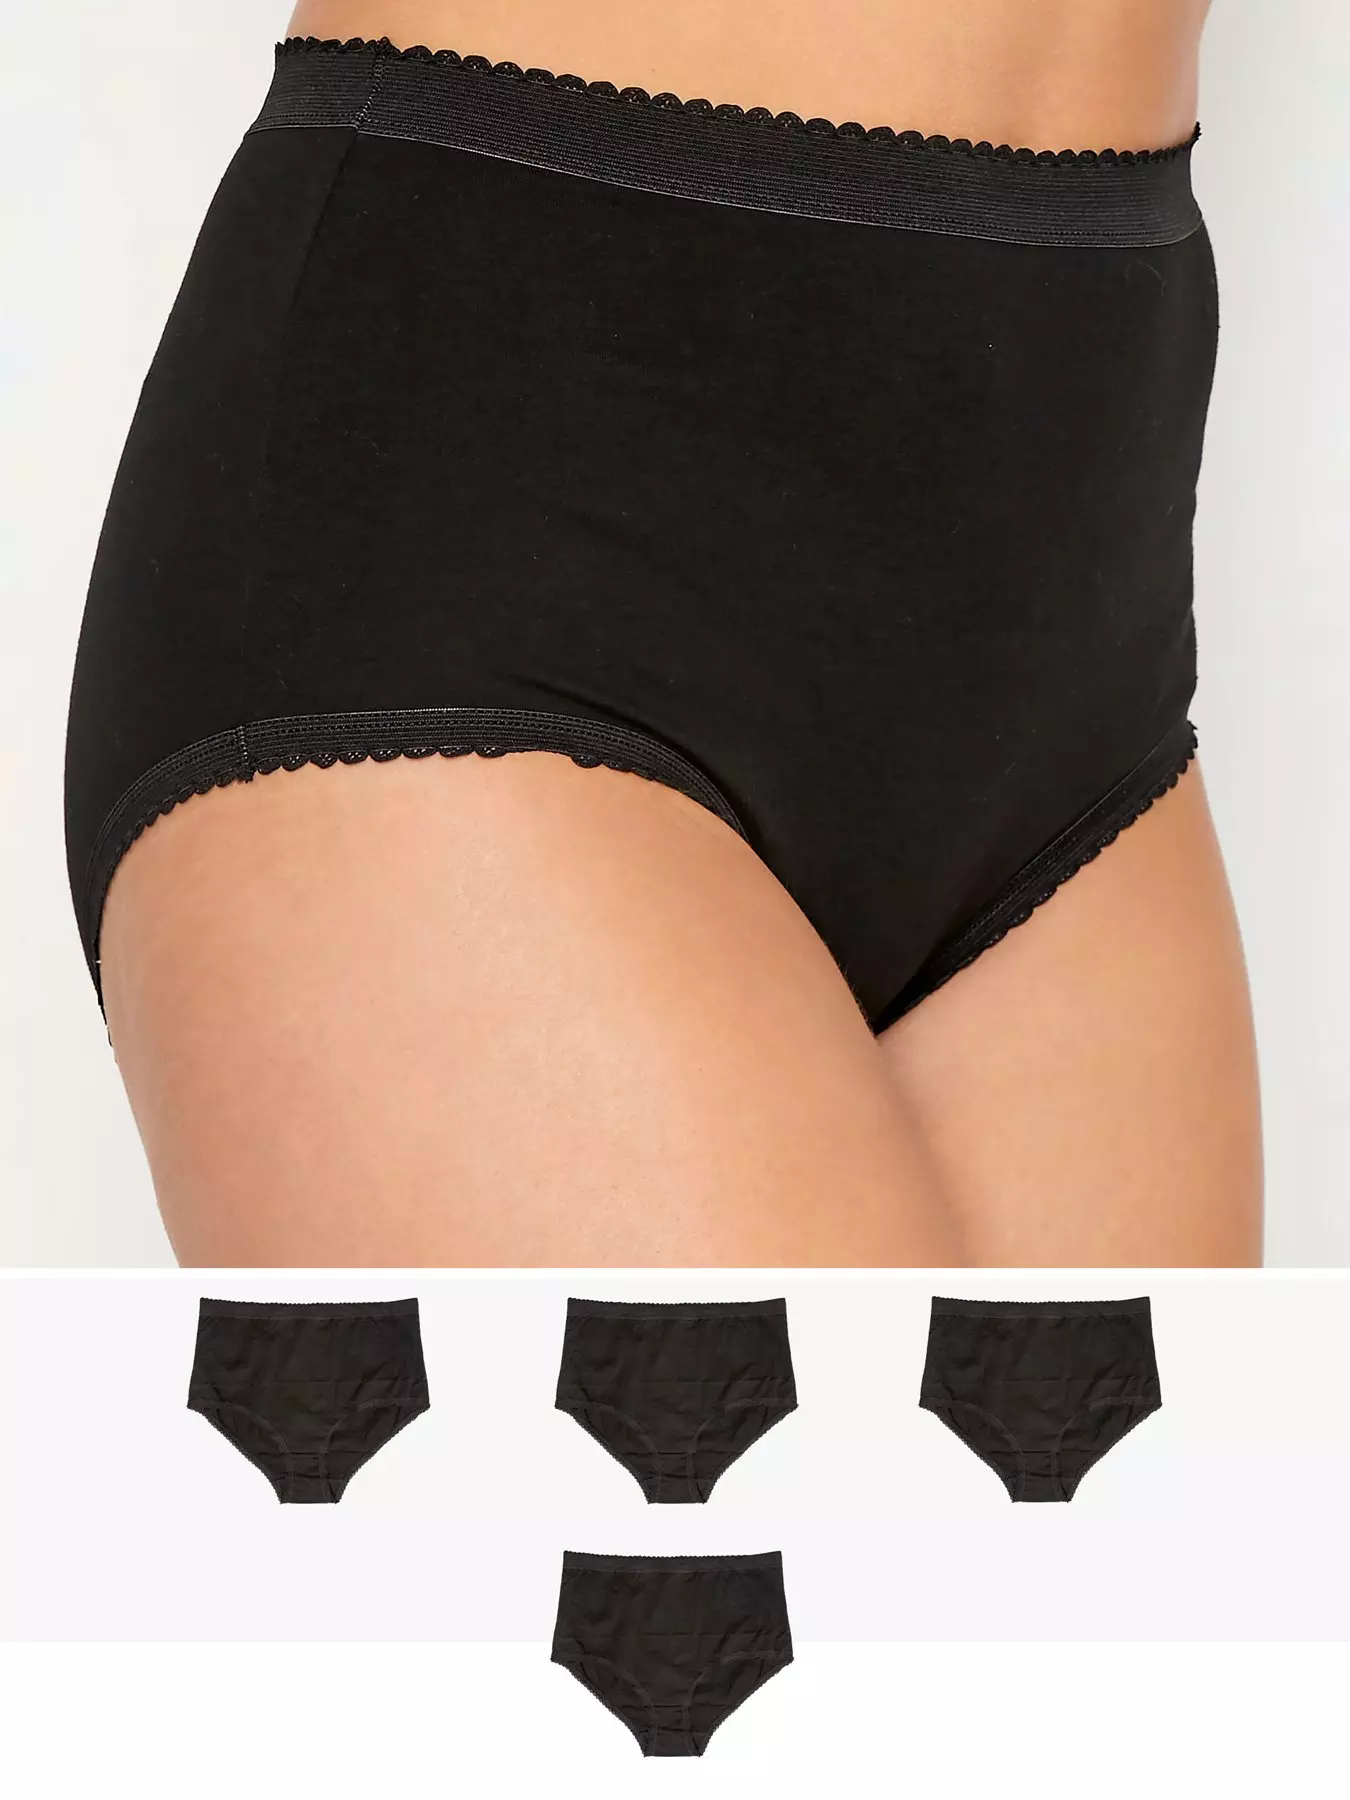 Jeccie 6 Packs Girls Underwear 100% Cotton Breathable Comfort